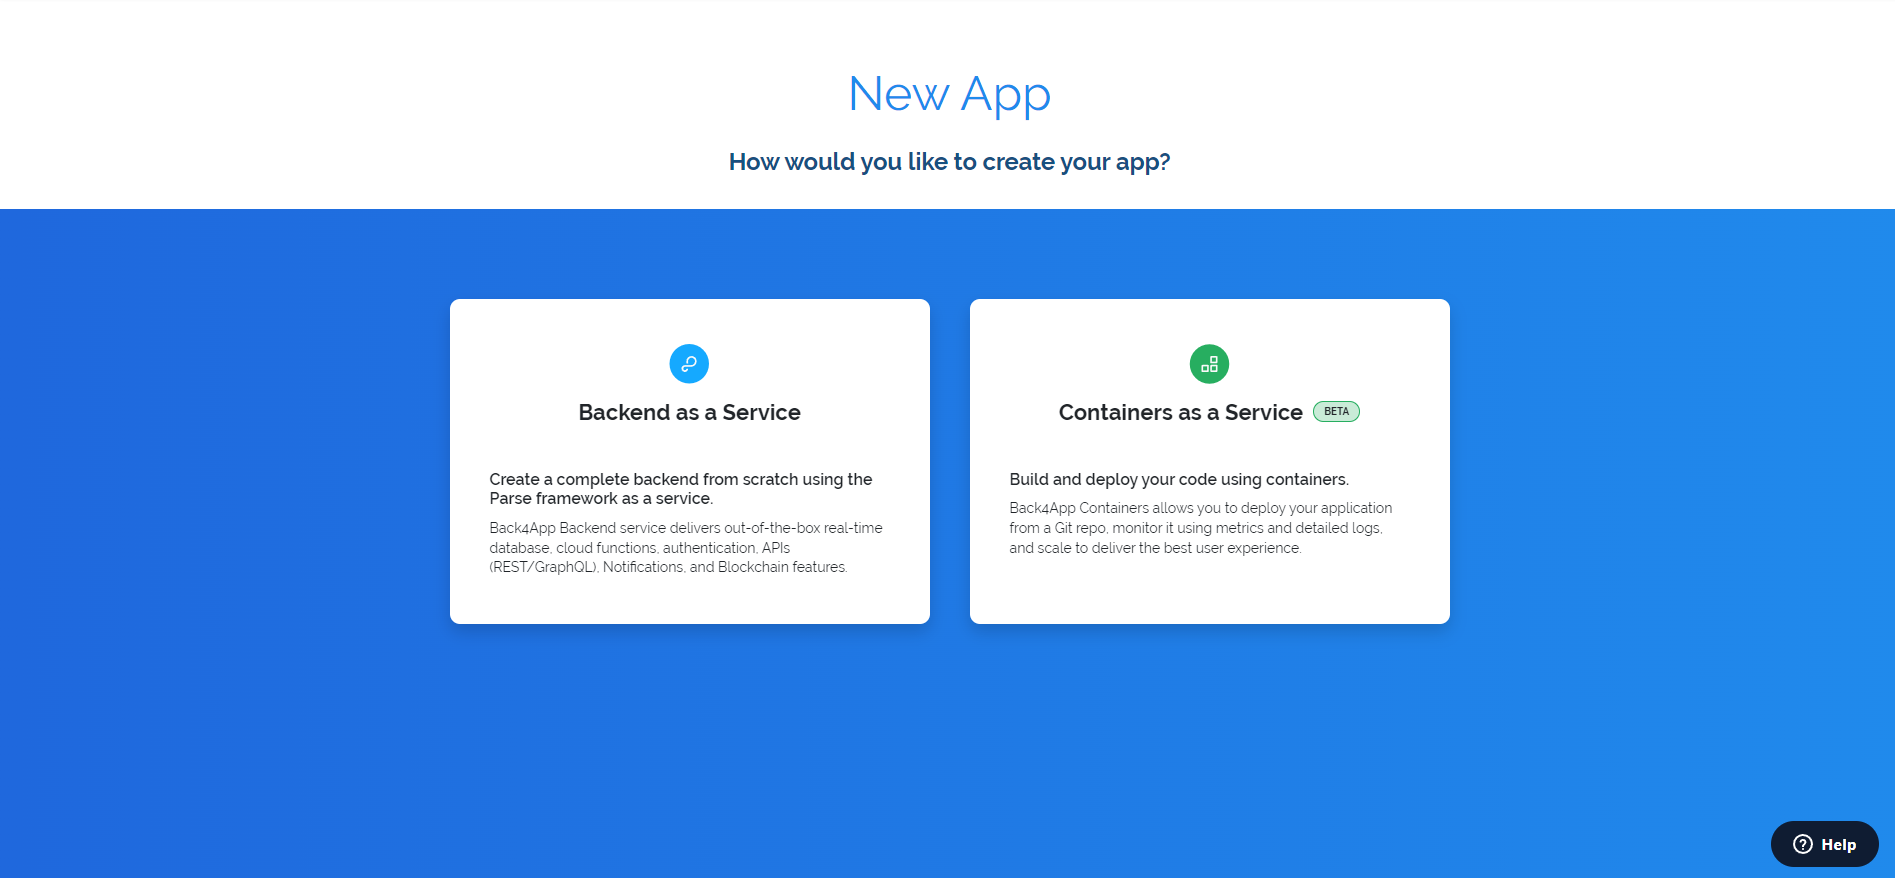 The back4app app options